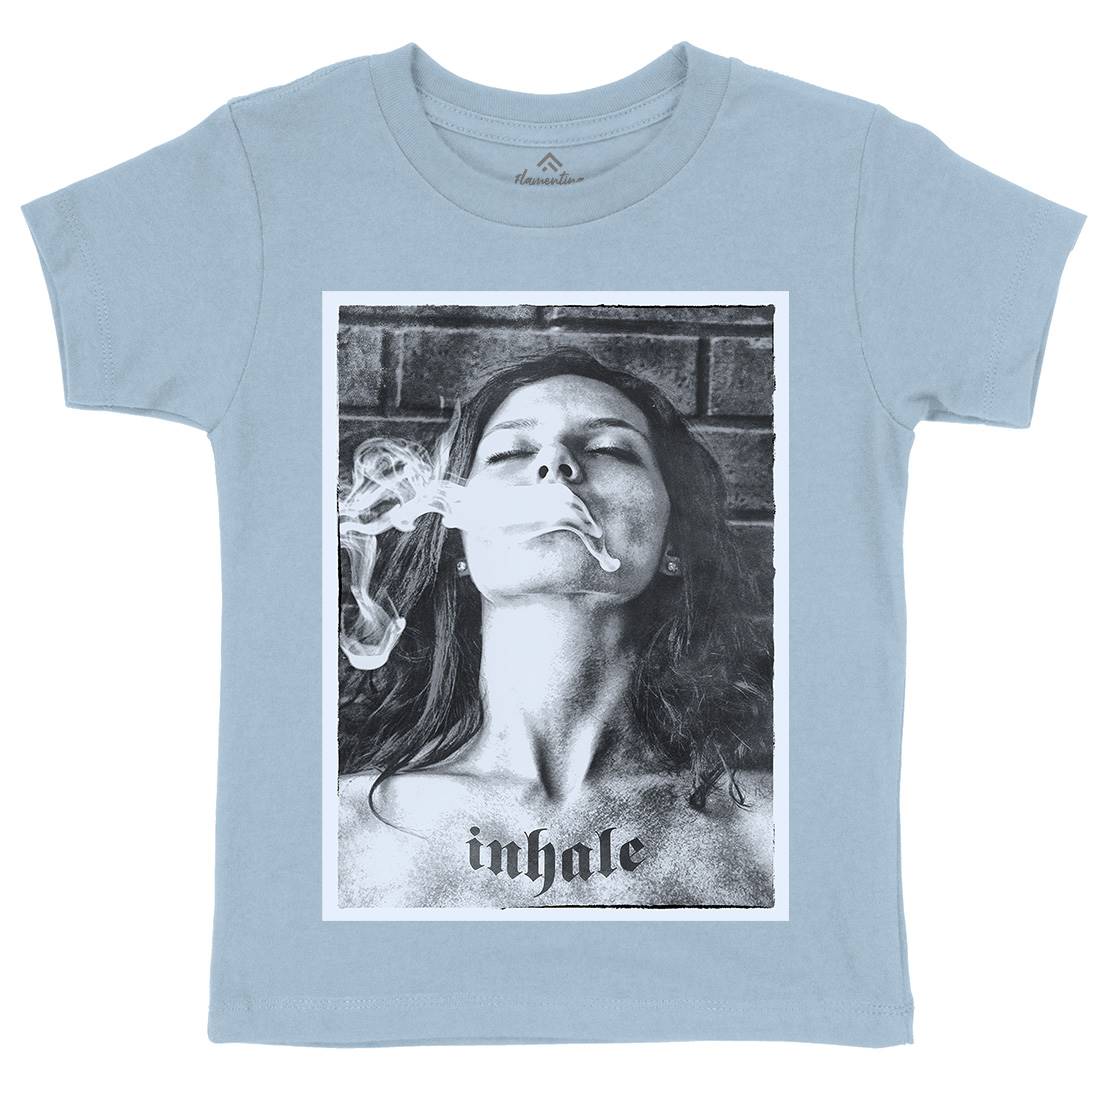 Inhale Kids Crew Neck T-Shirt Drugs A851